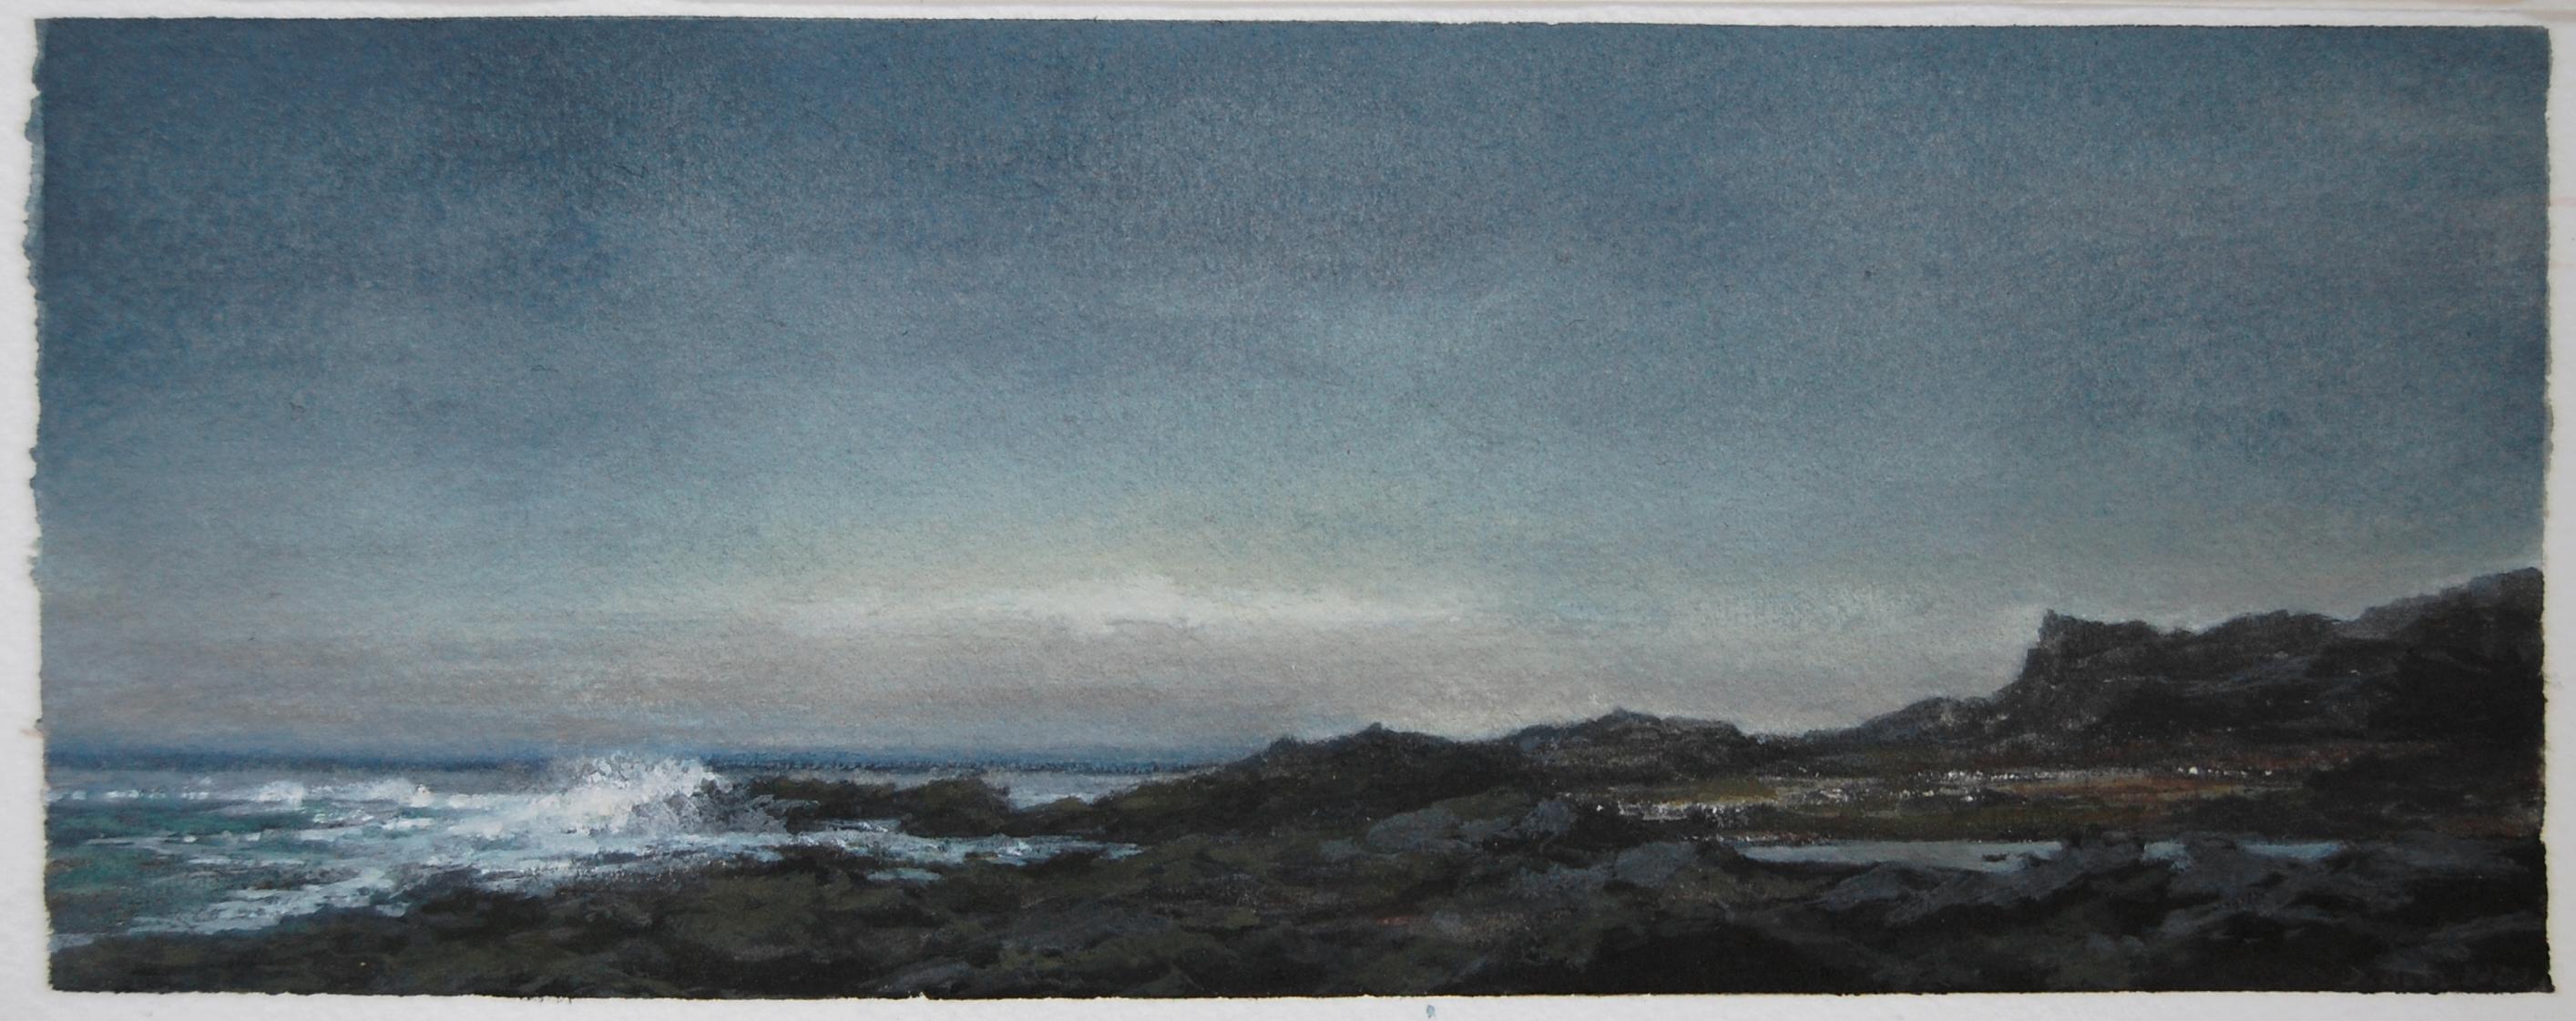 Dozier Bell Landscape Art - Shore, towards dusk, northeastern seascape watercolor